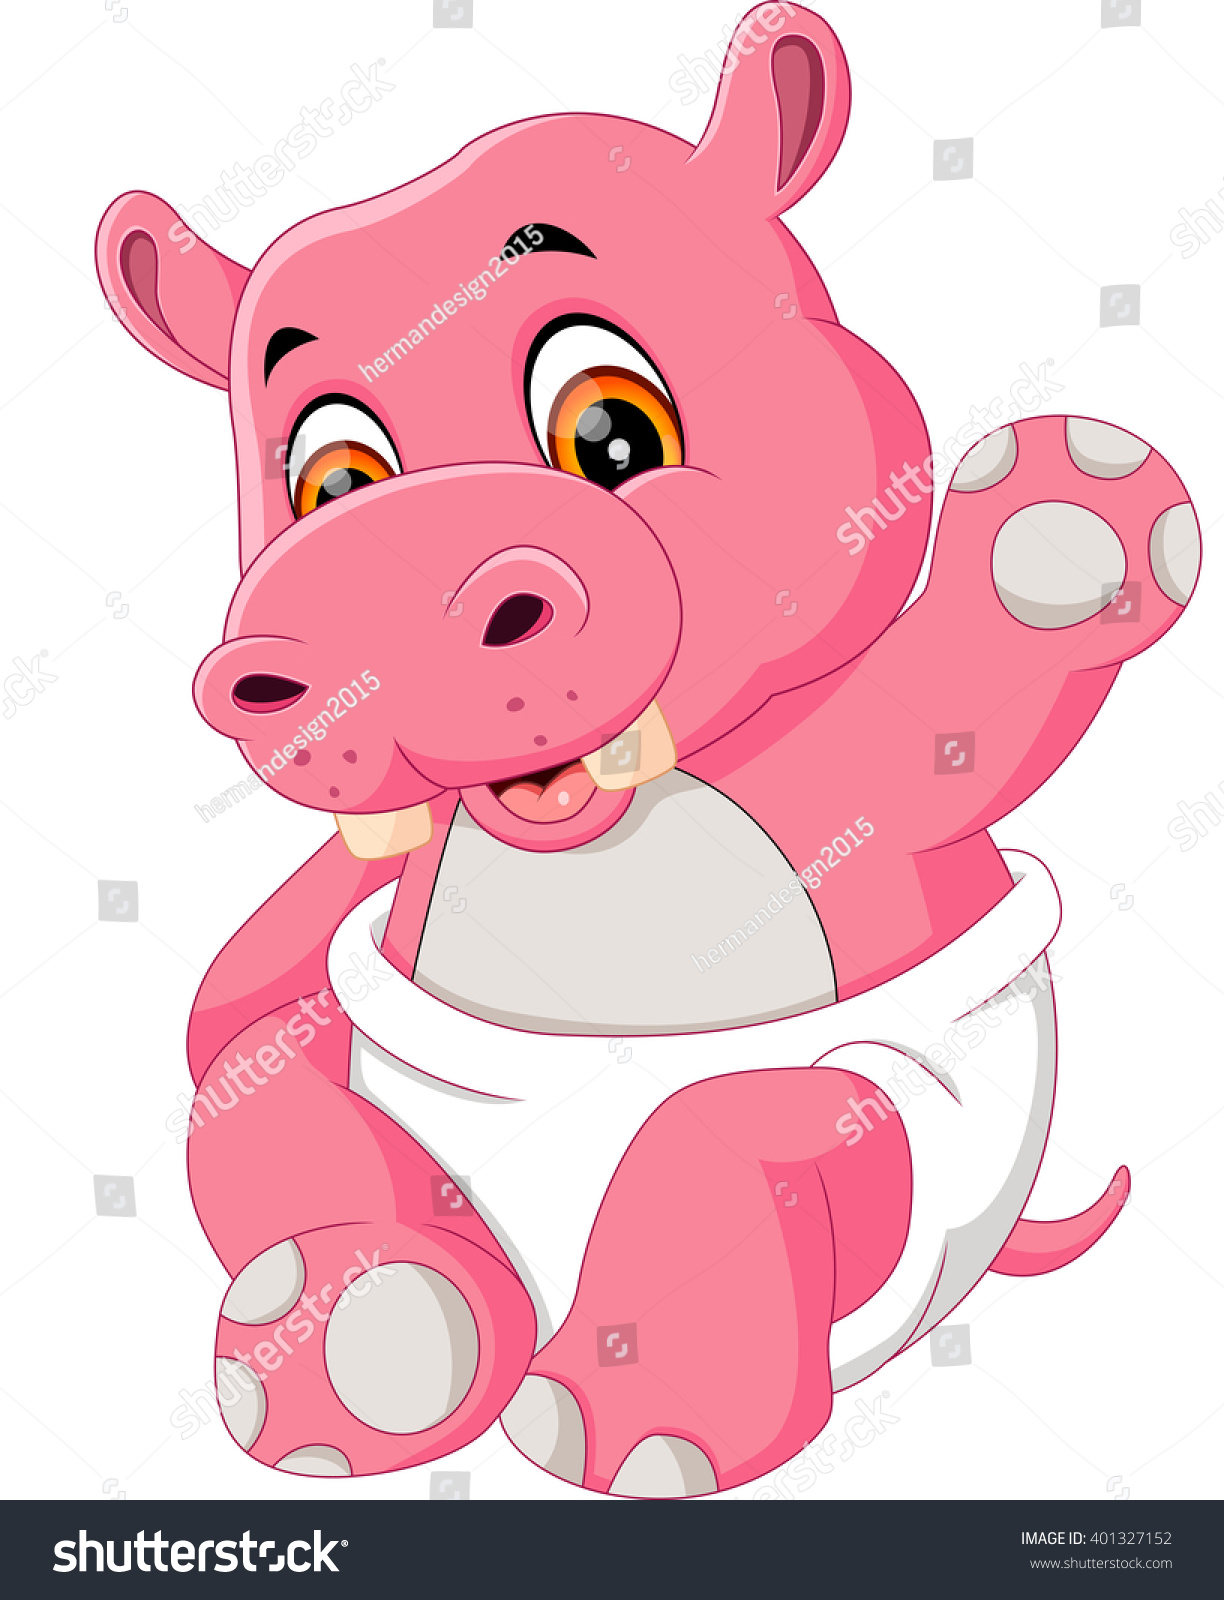 Download Illustration Cute Baby Hippo Cartoon Stock Vector ...